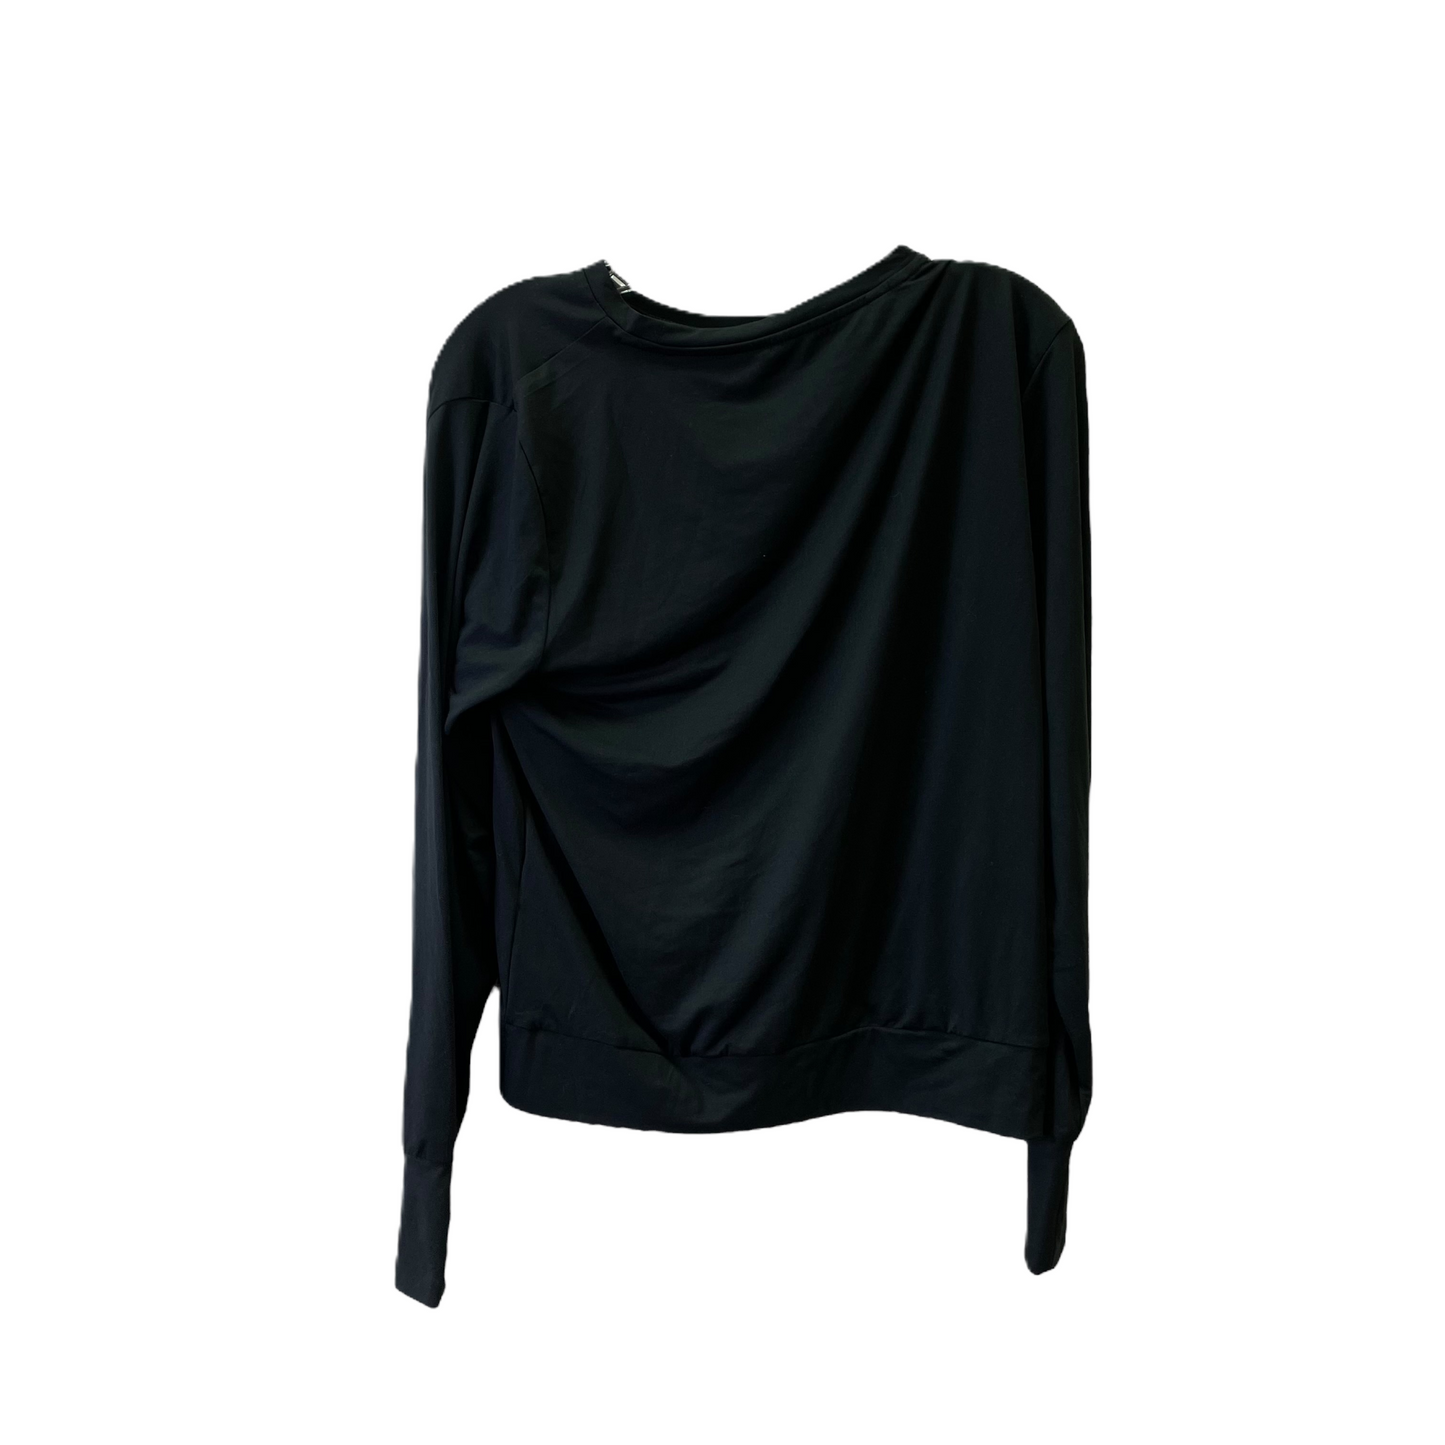 Black Top Long Sleeve Basic By Lukka, Size: M